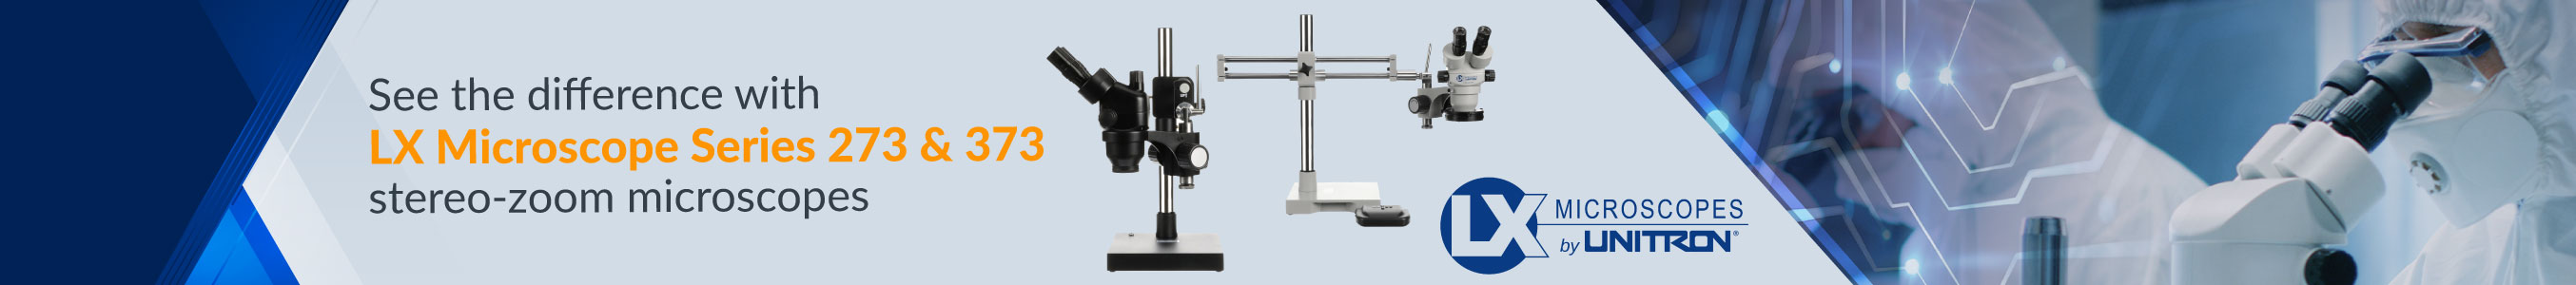 LX Microscopes by Unitron